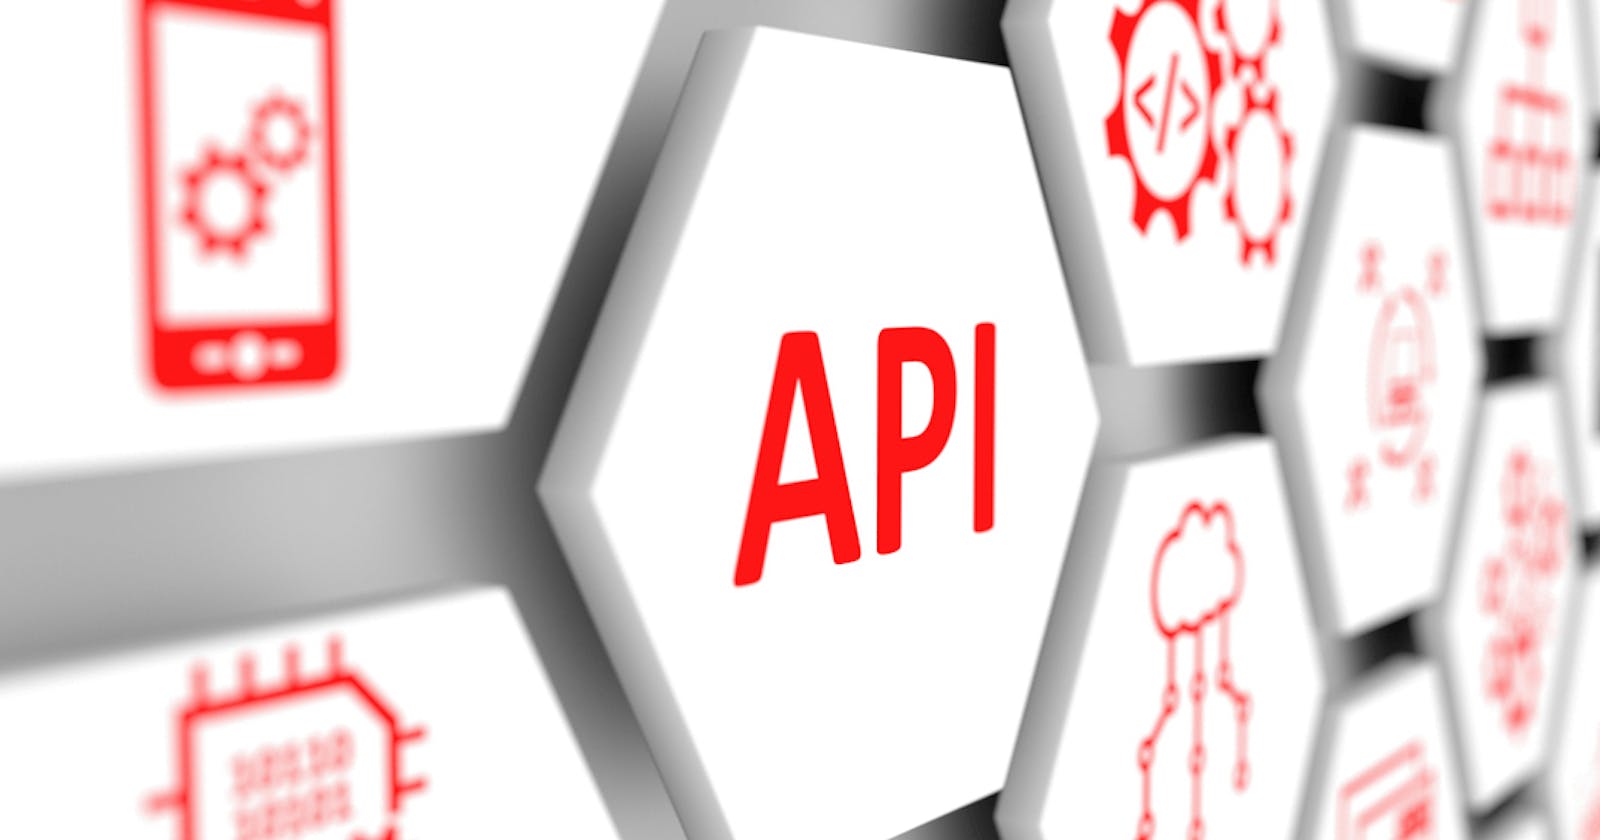 Bulk Address Verification With the Lob API